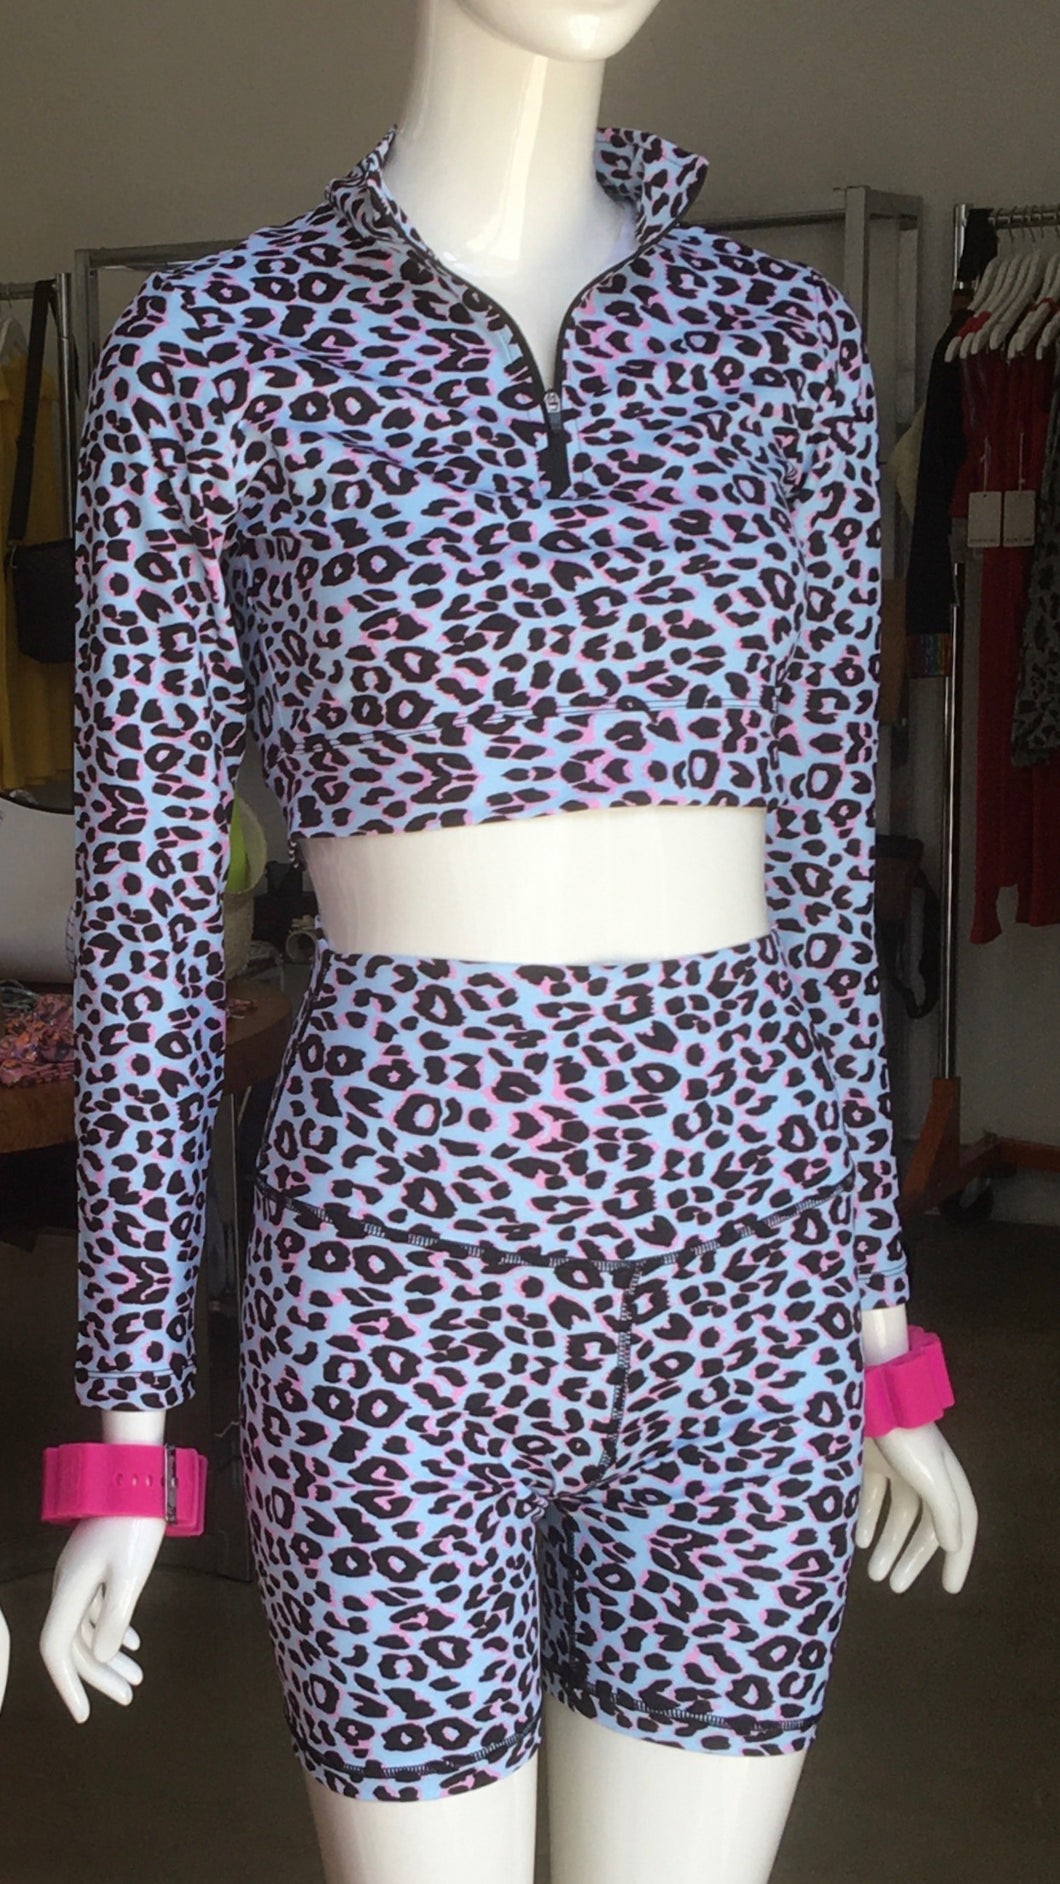 Glimpse the Label - Bike Shorts - Cotton Candy Leopard